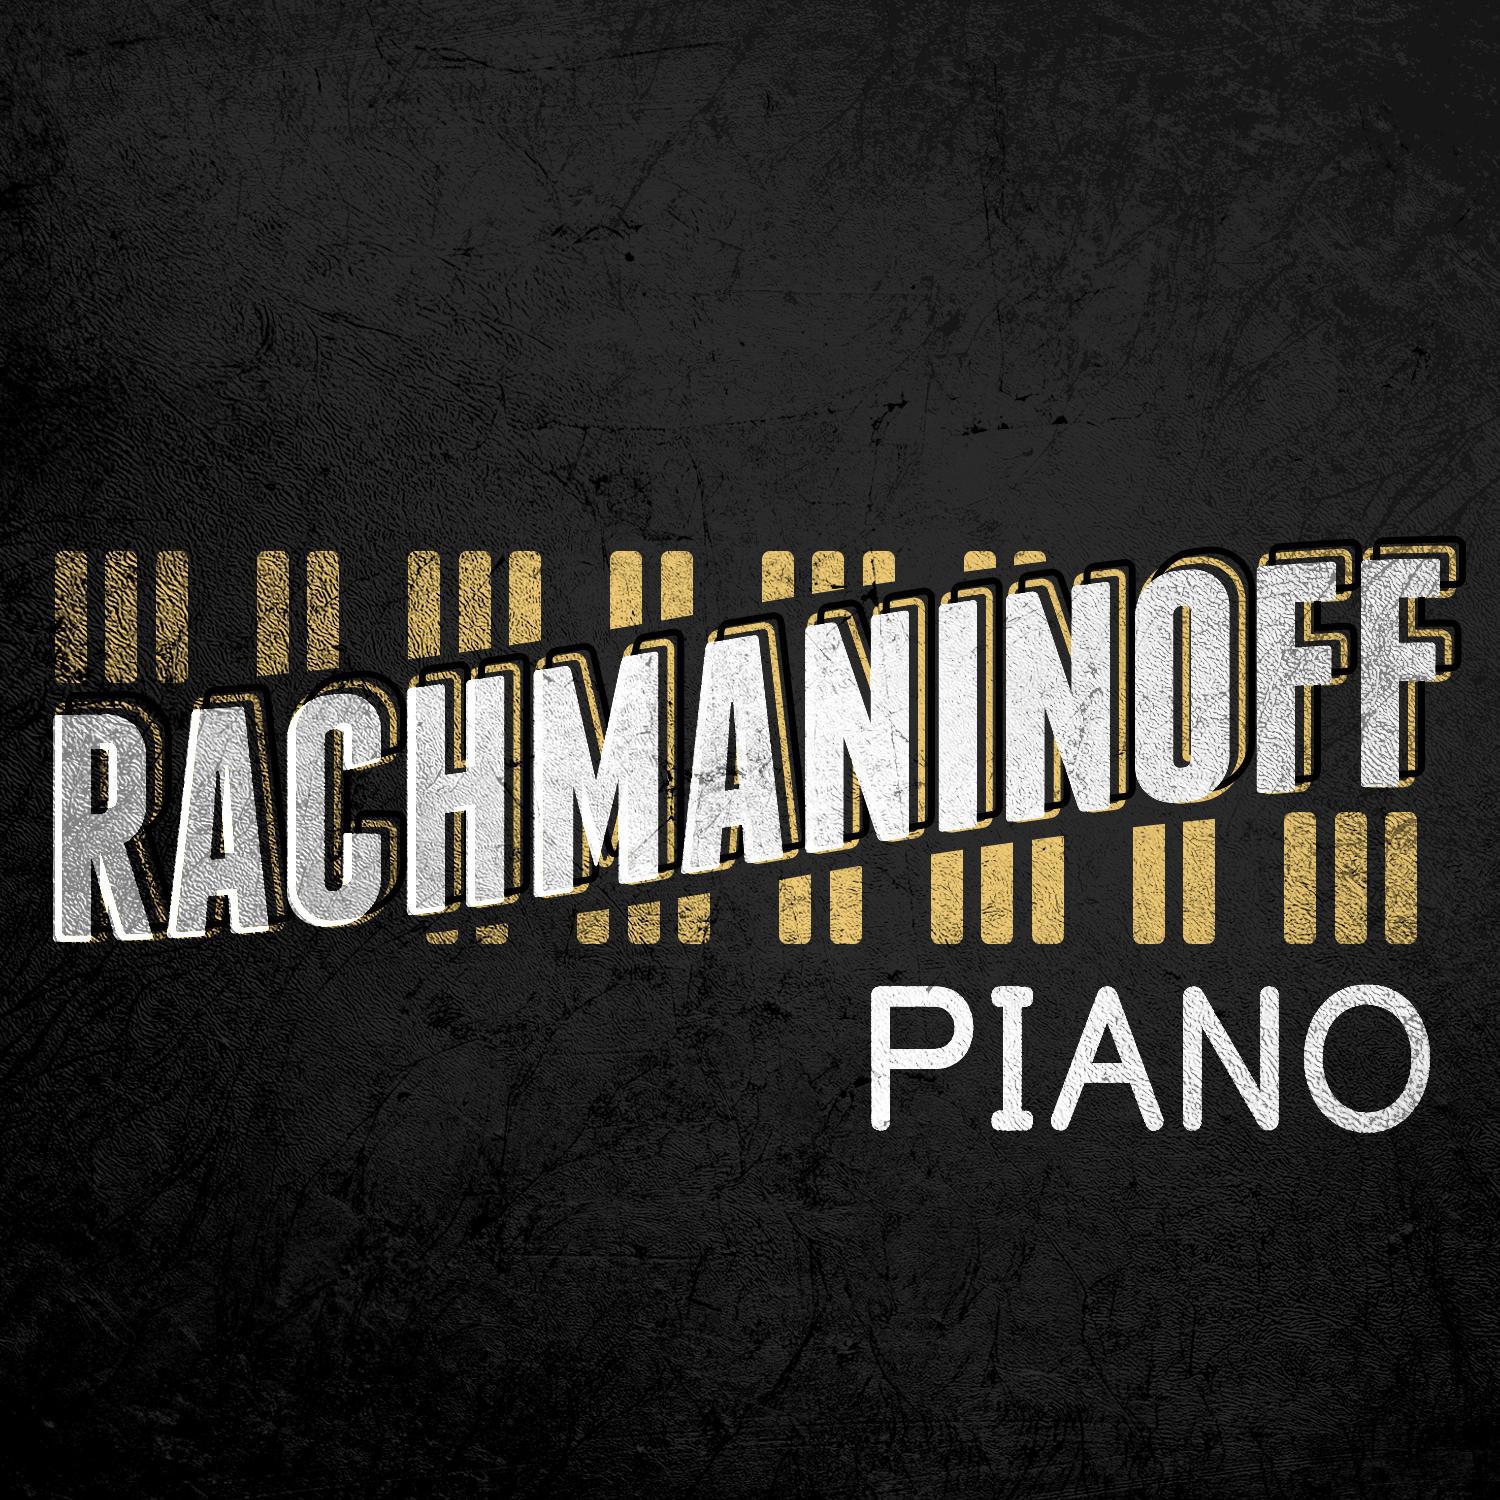 Rachmaninoff: Piano